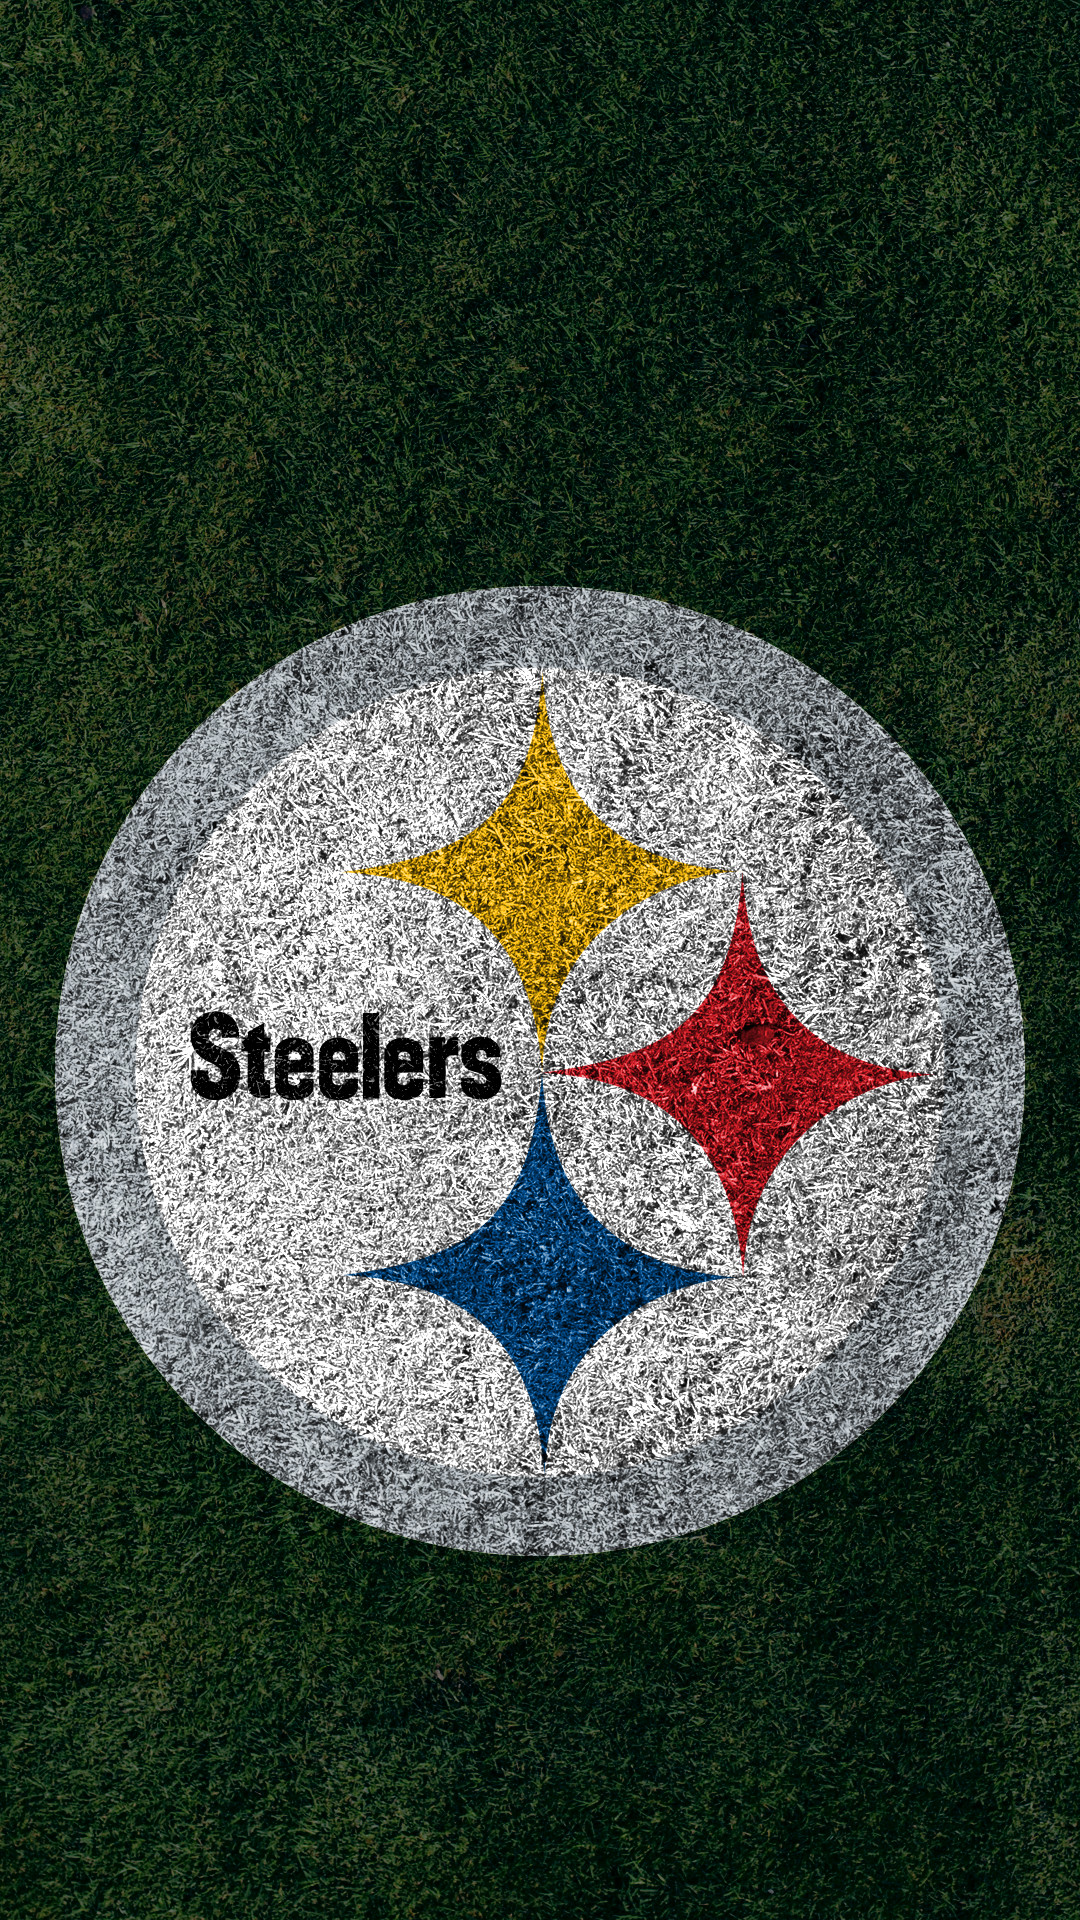 Galaxy Pittsburgh Steelers 2017 turf logo wallpaper free iphone 5, 6, 7, galaxy s6